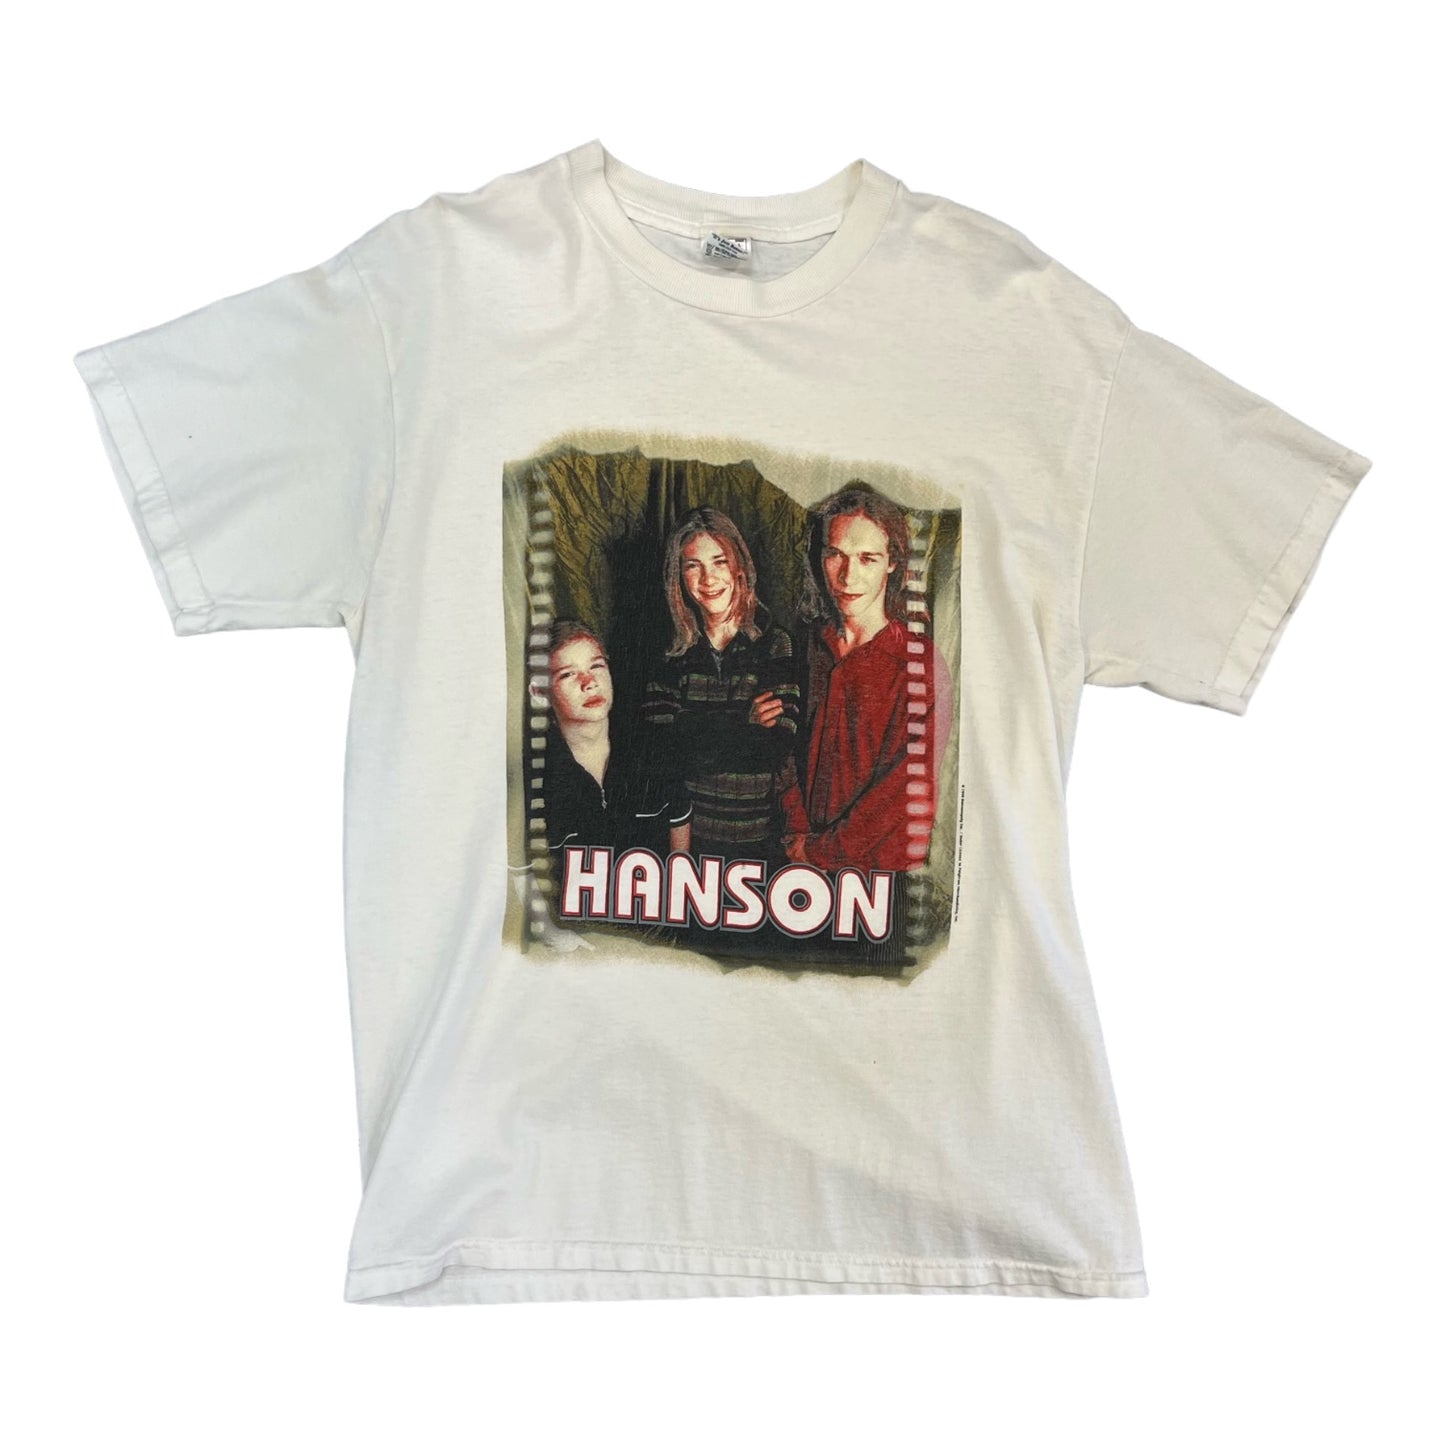 1998 Hanson band tee